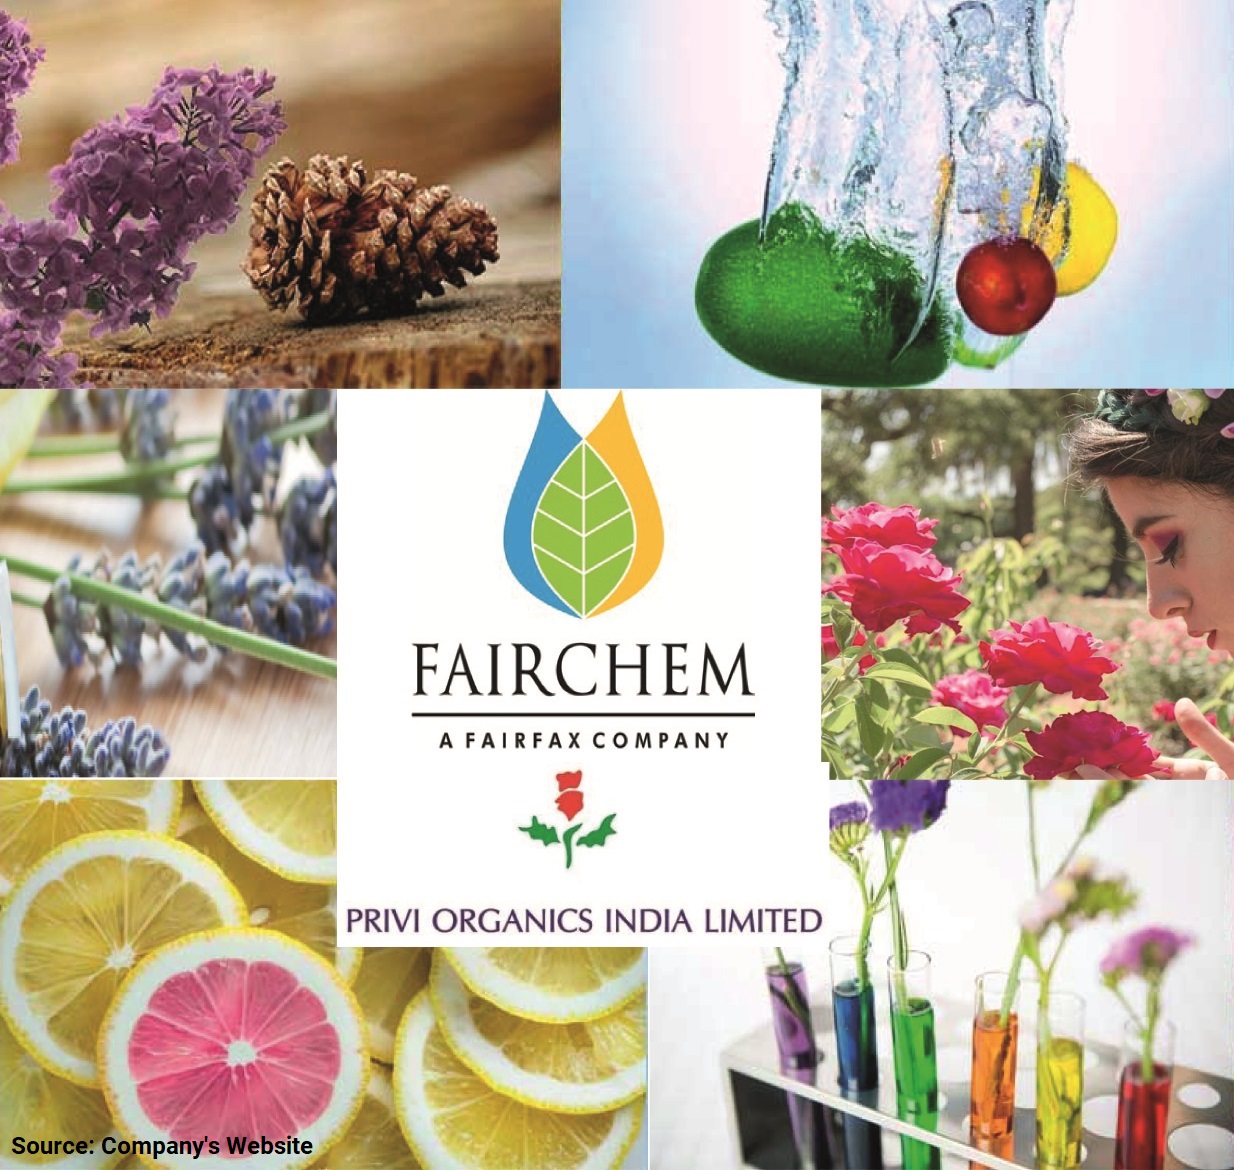 Fairfax-India-Fairchem-Speciality-Privi-Organics-demerger-merger